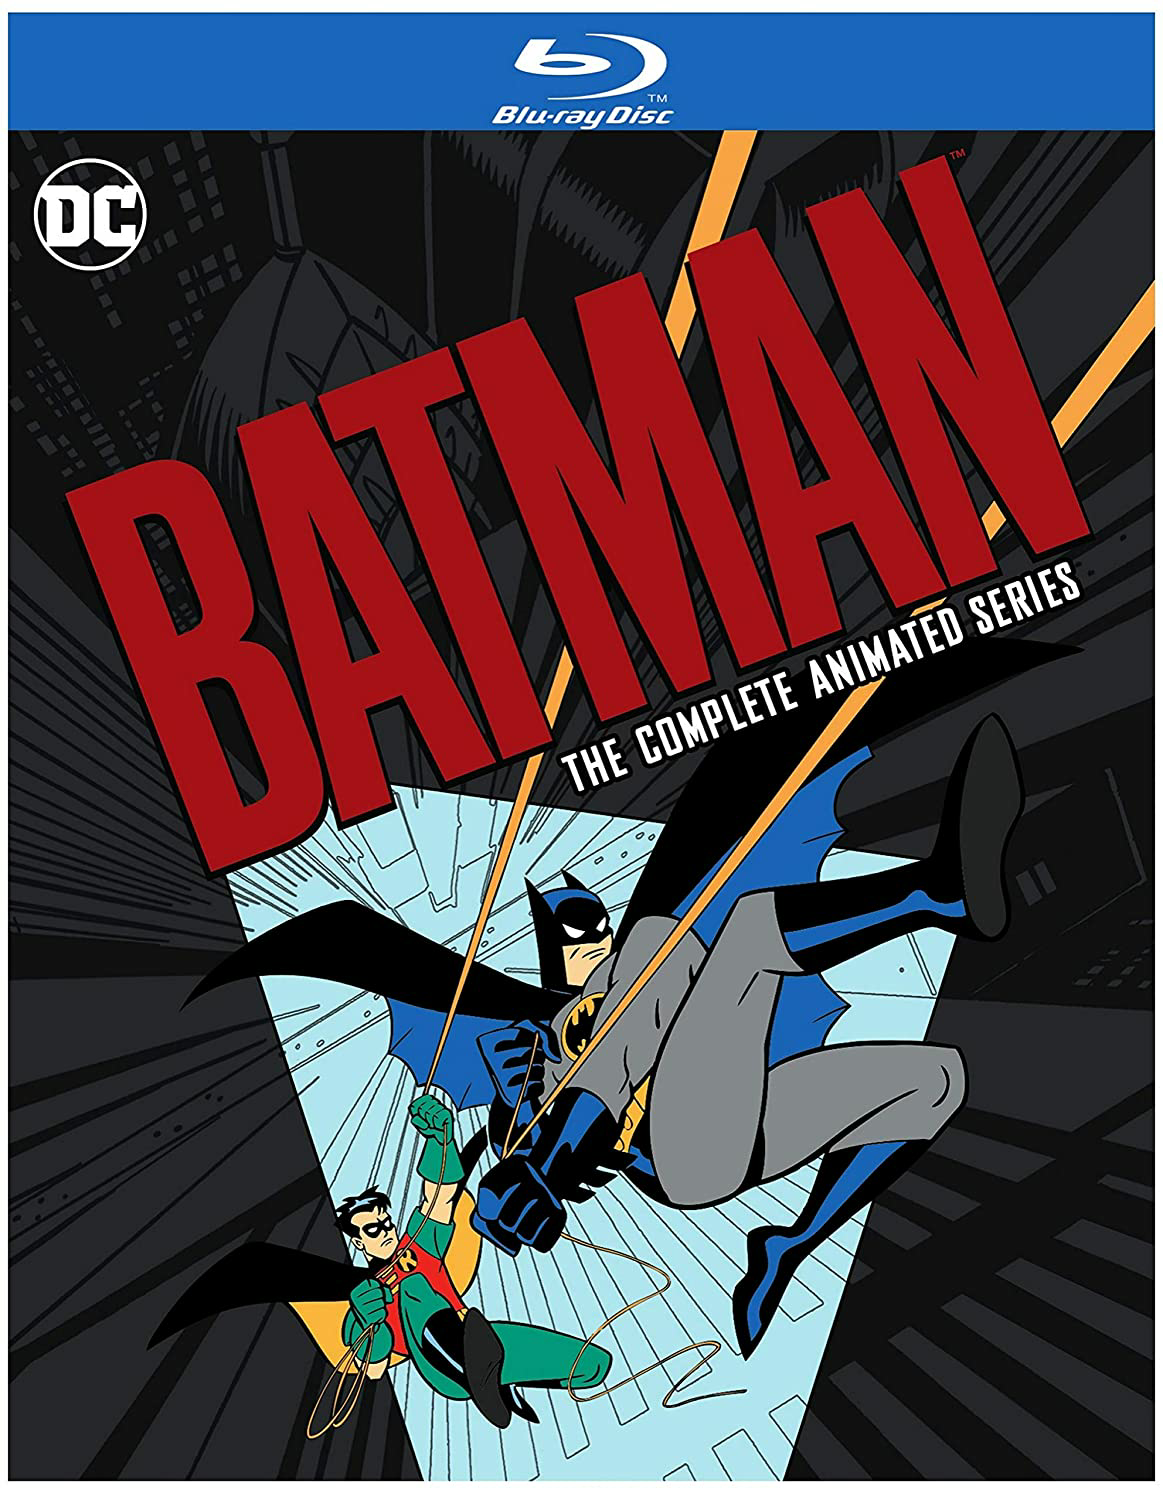 Amazon.com: Batman: The Complete Animated Series (Blu-ray): Various, Various: Movies & TV $42.99